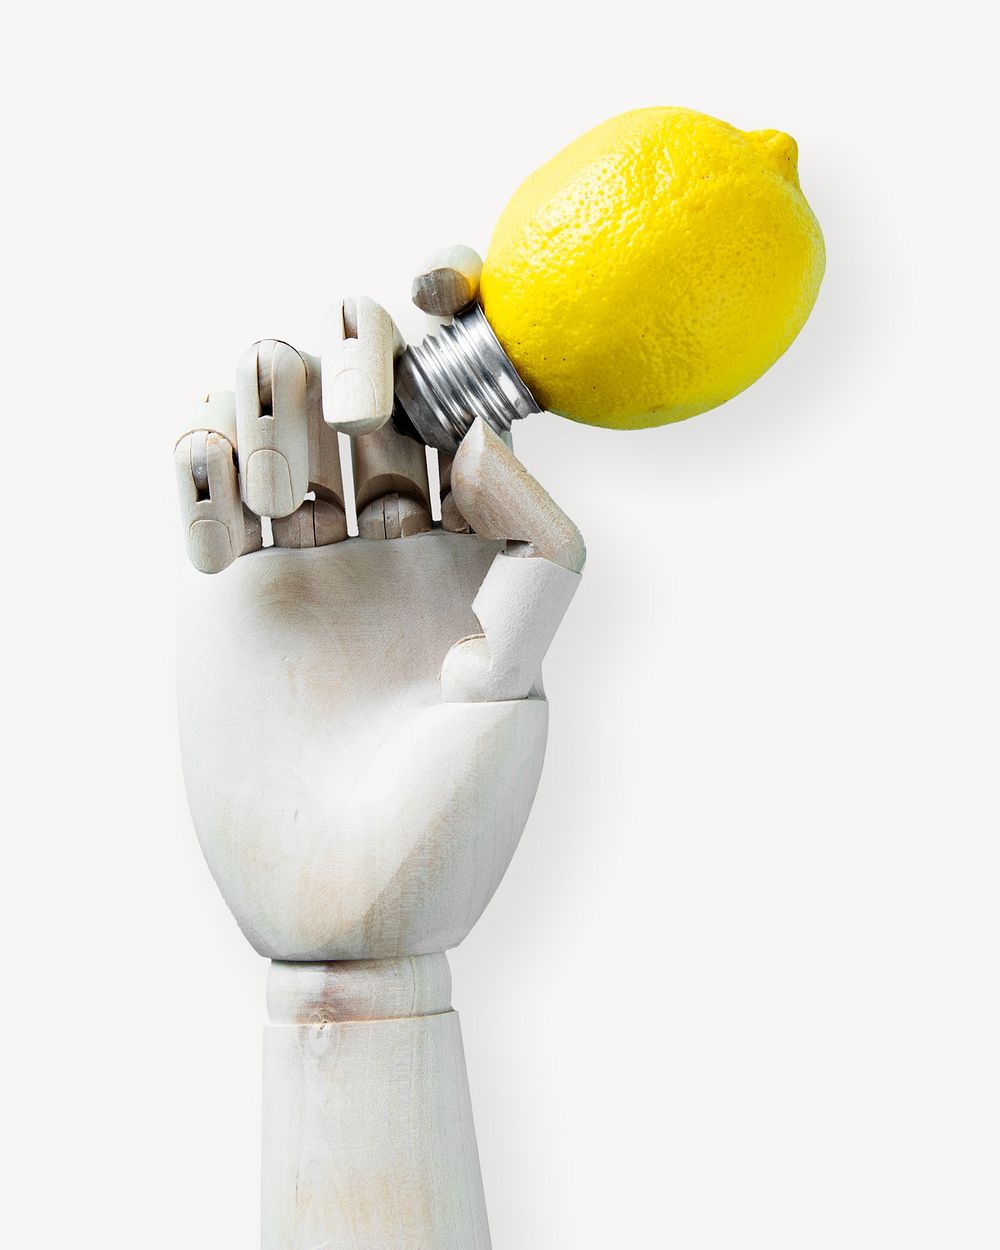 Hand holding a lemon bulb